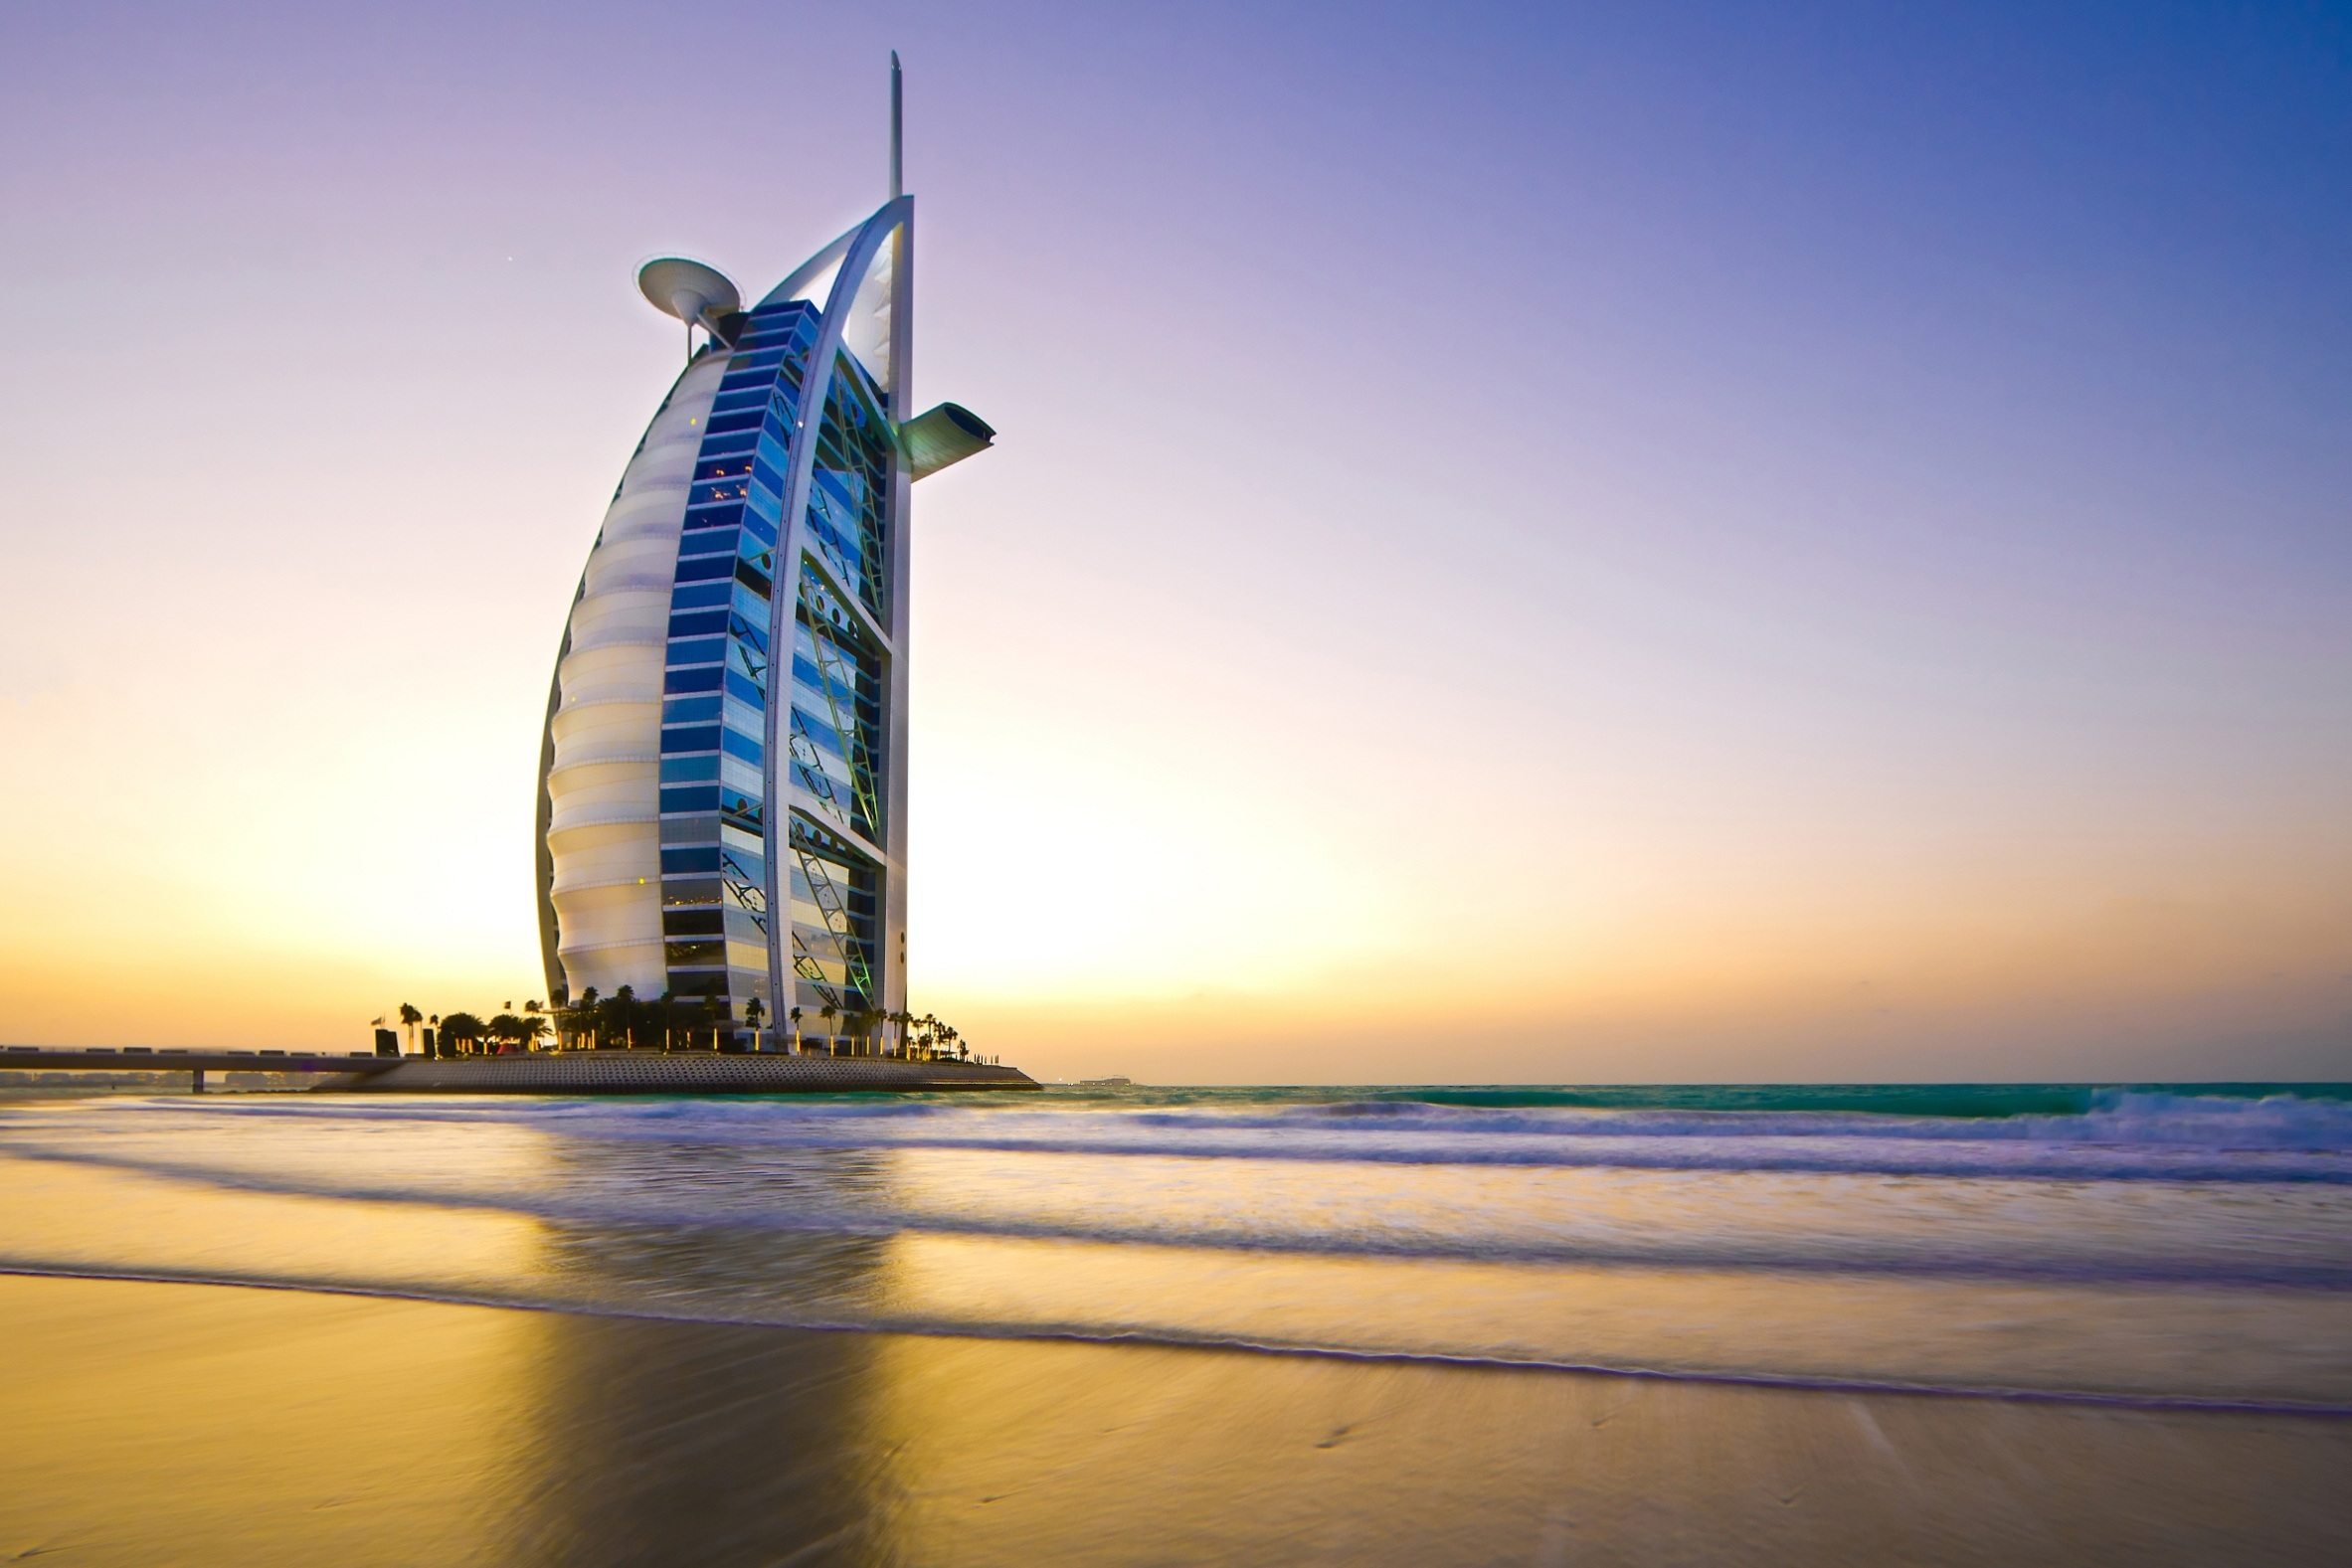 Executive Assistant Salaries in Dubai